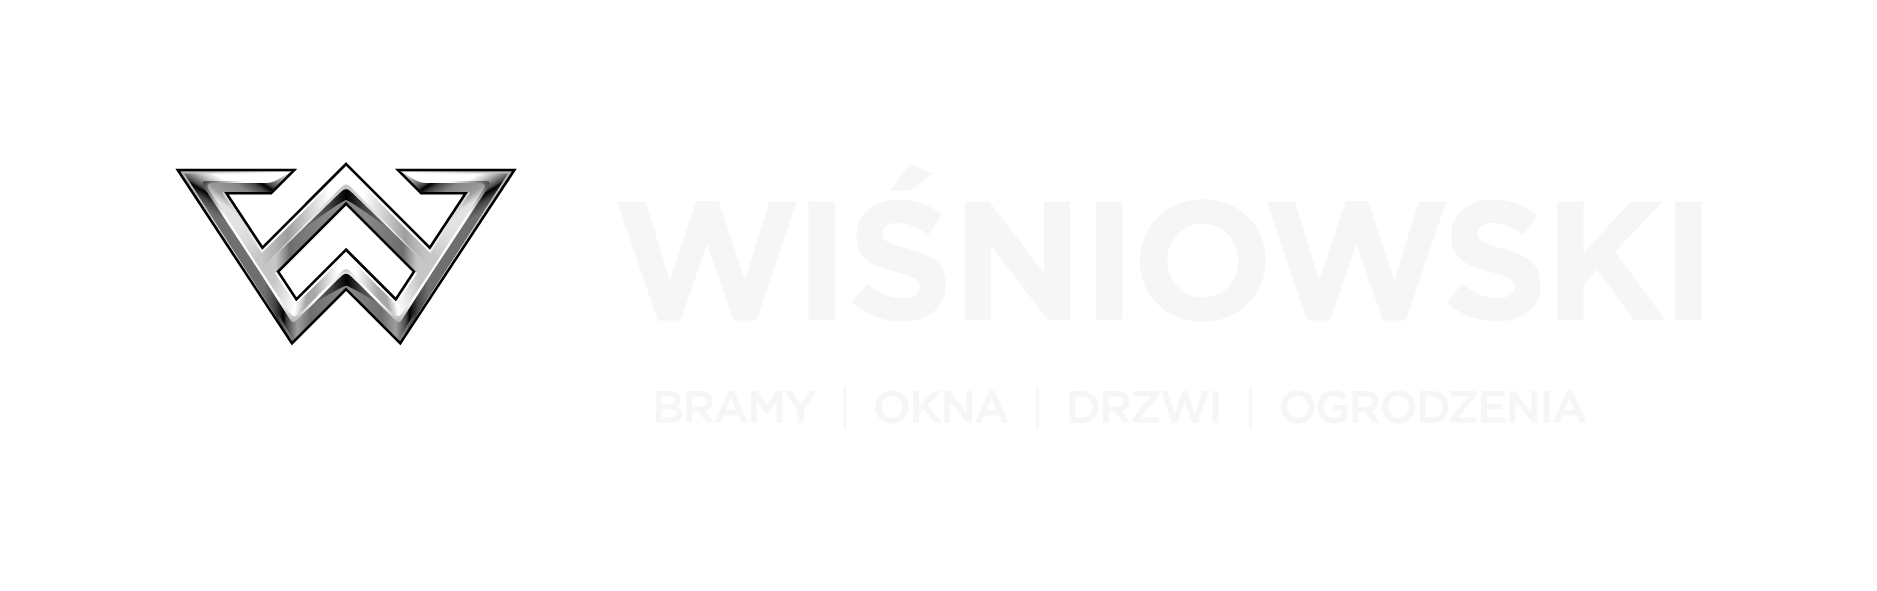 pl_WISNIOWSKI horizontal inverse no bg@4x